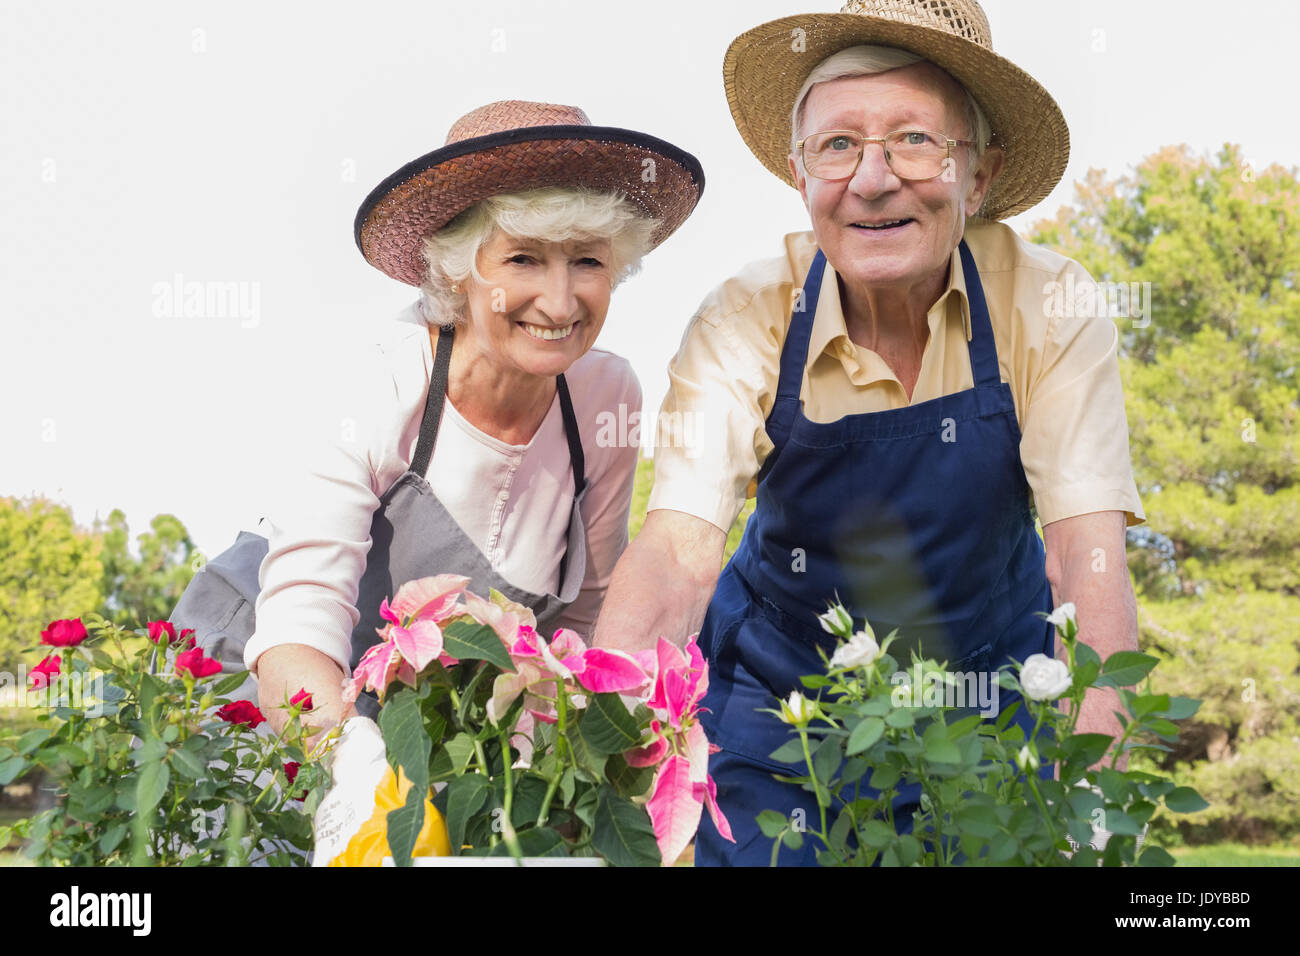 Elderly couple wearing straw hats gardening together Stock Photo